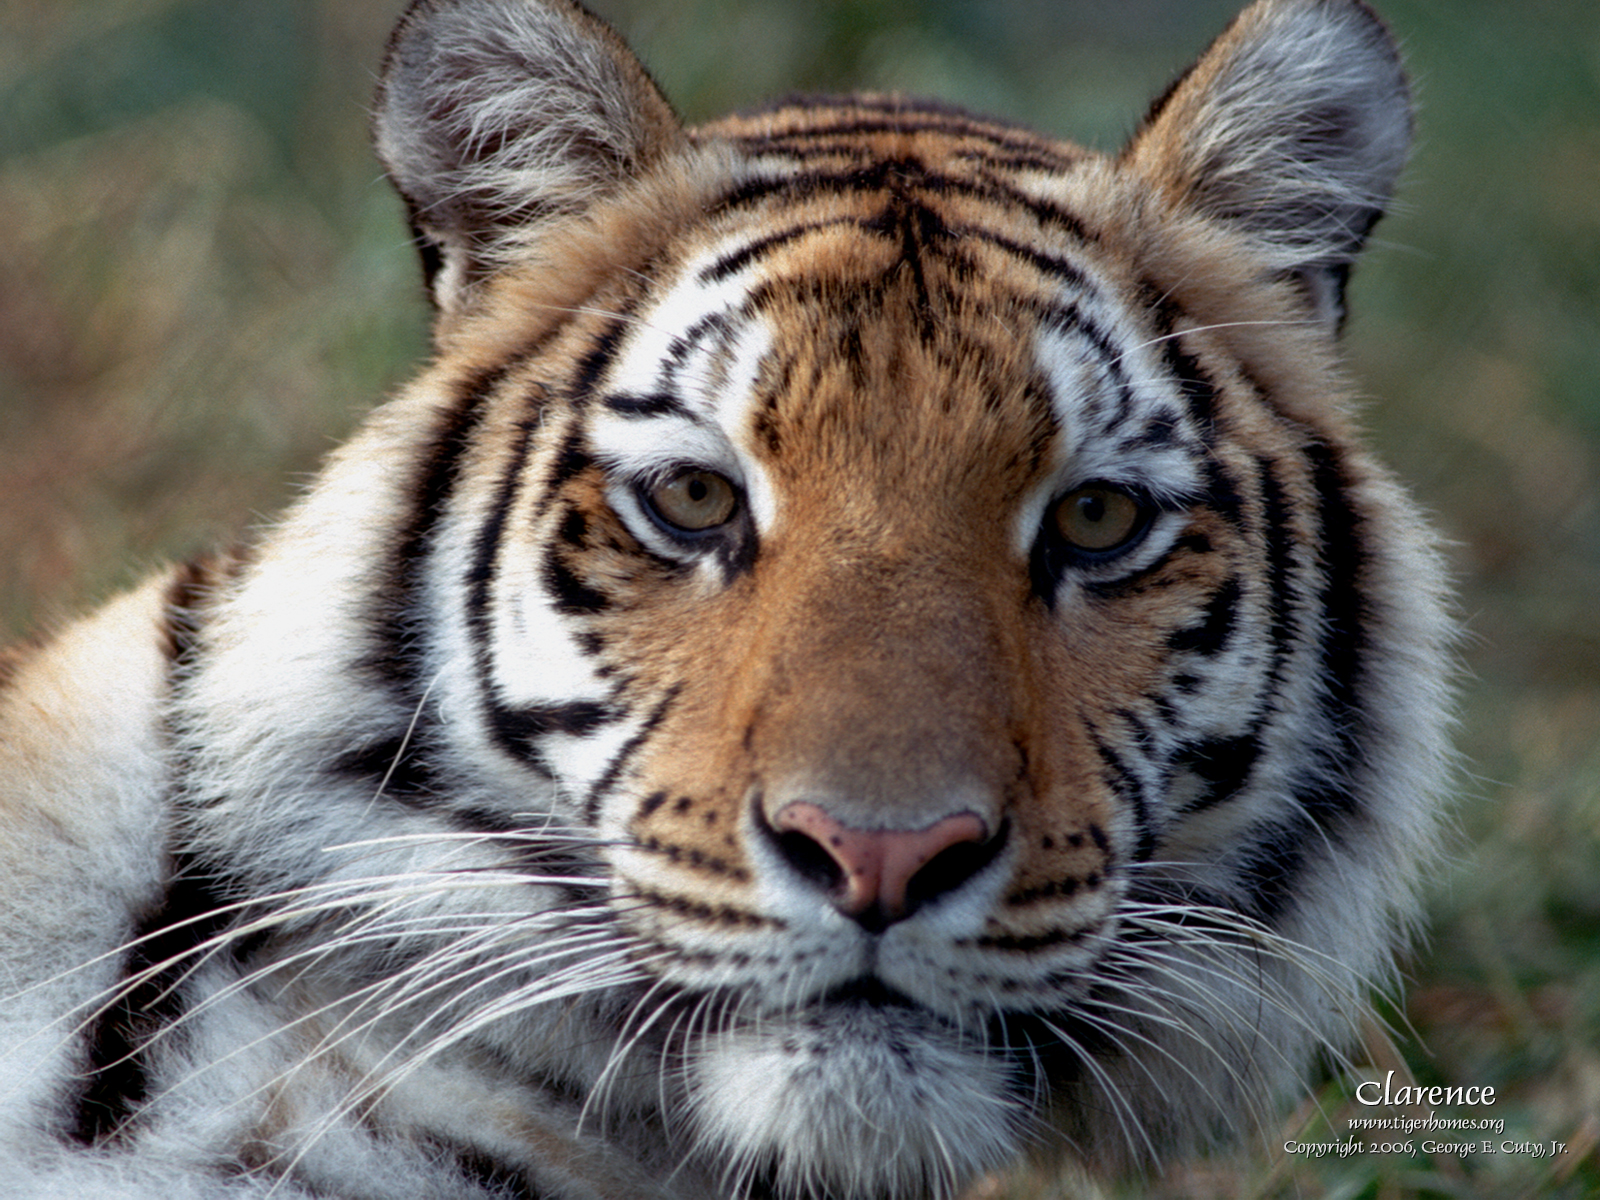 Tiger Desktop Wallpaper   White Tiger   Bengal and Siberian Tigers